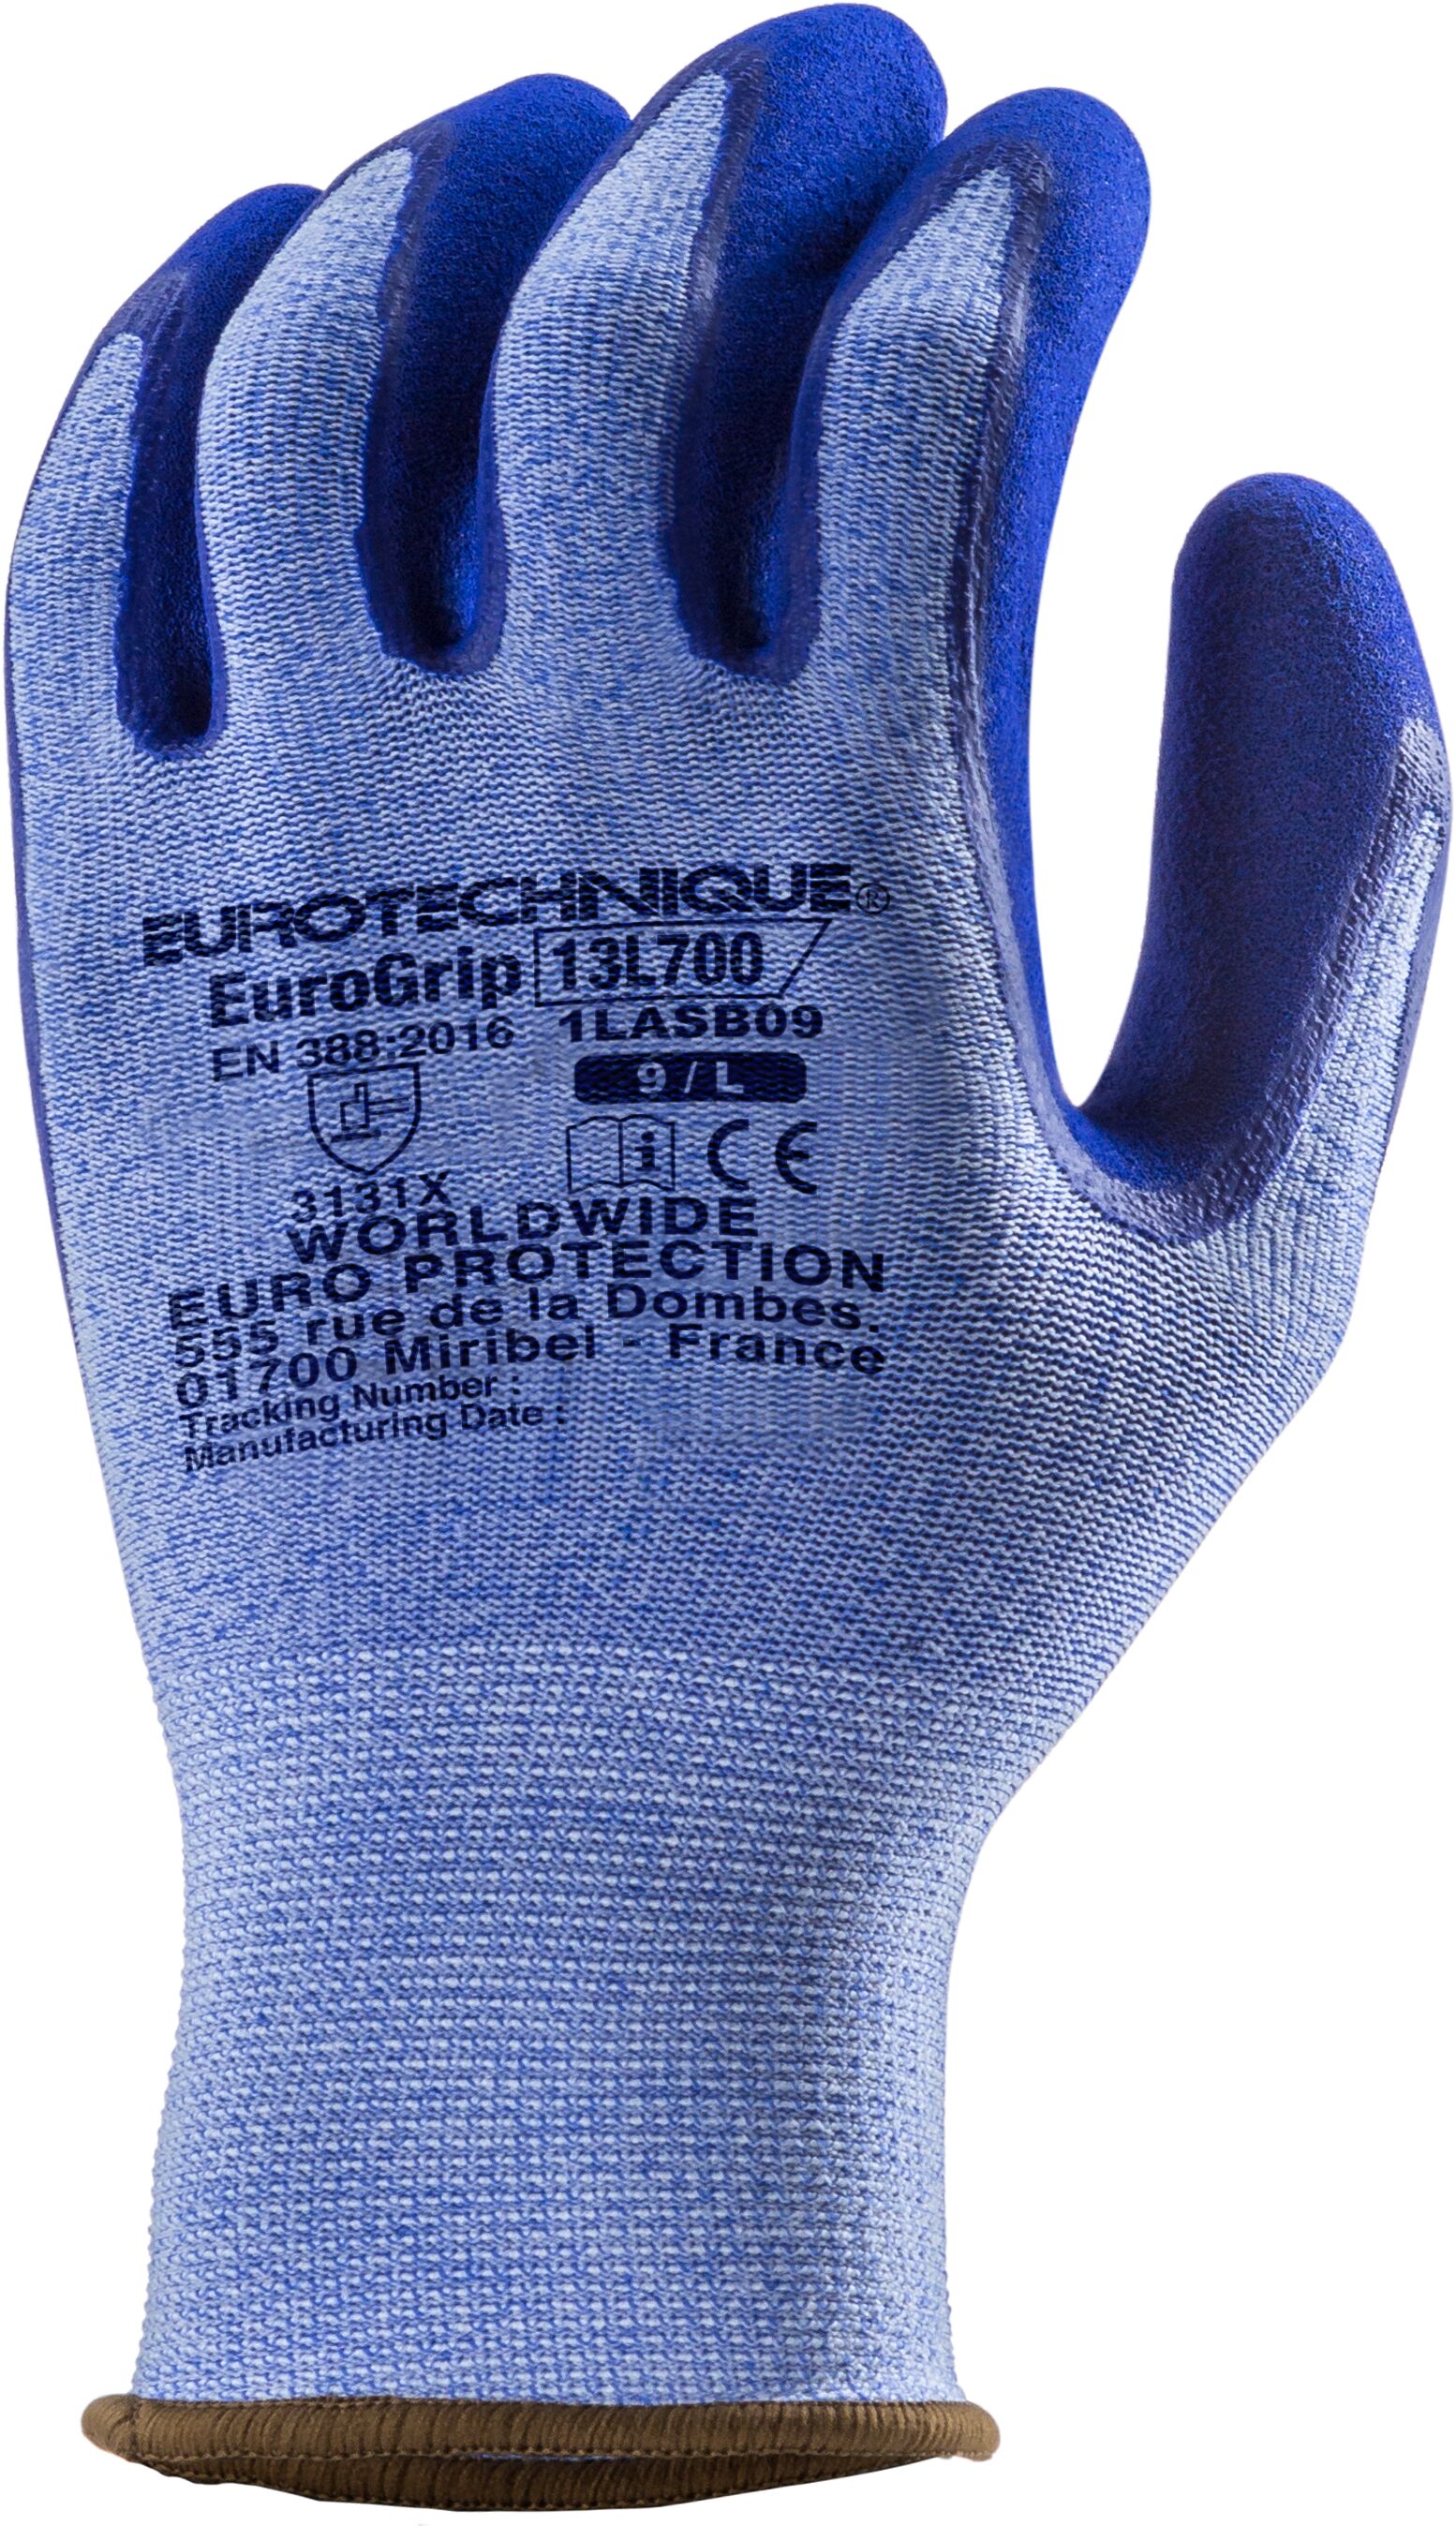 https://ayksxzrhep.cloudimg.io/v7/https://mister-materiaux-images.s3.eu-west-3.amazonaws.com/products/f/c/4/7/coverguard-gants-manutention-eurogrip-13l700-en-polyester-et-spandex-bleu-jauge-13-double-enduction-latex-bleu-image-431728.tiff